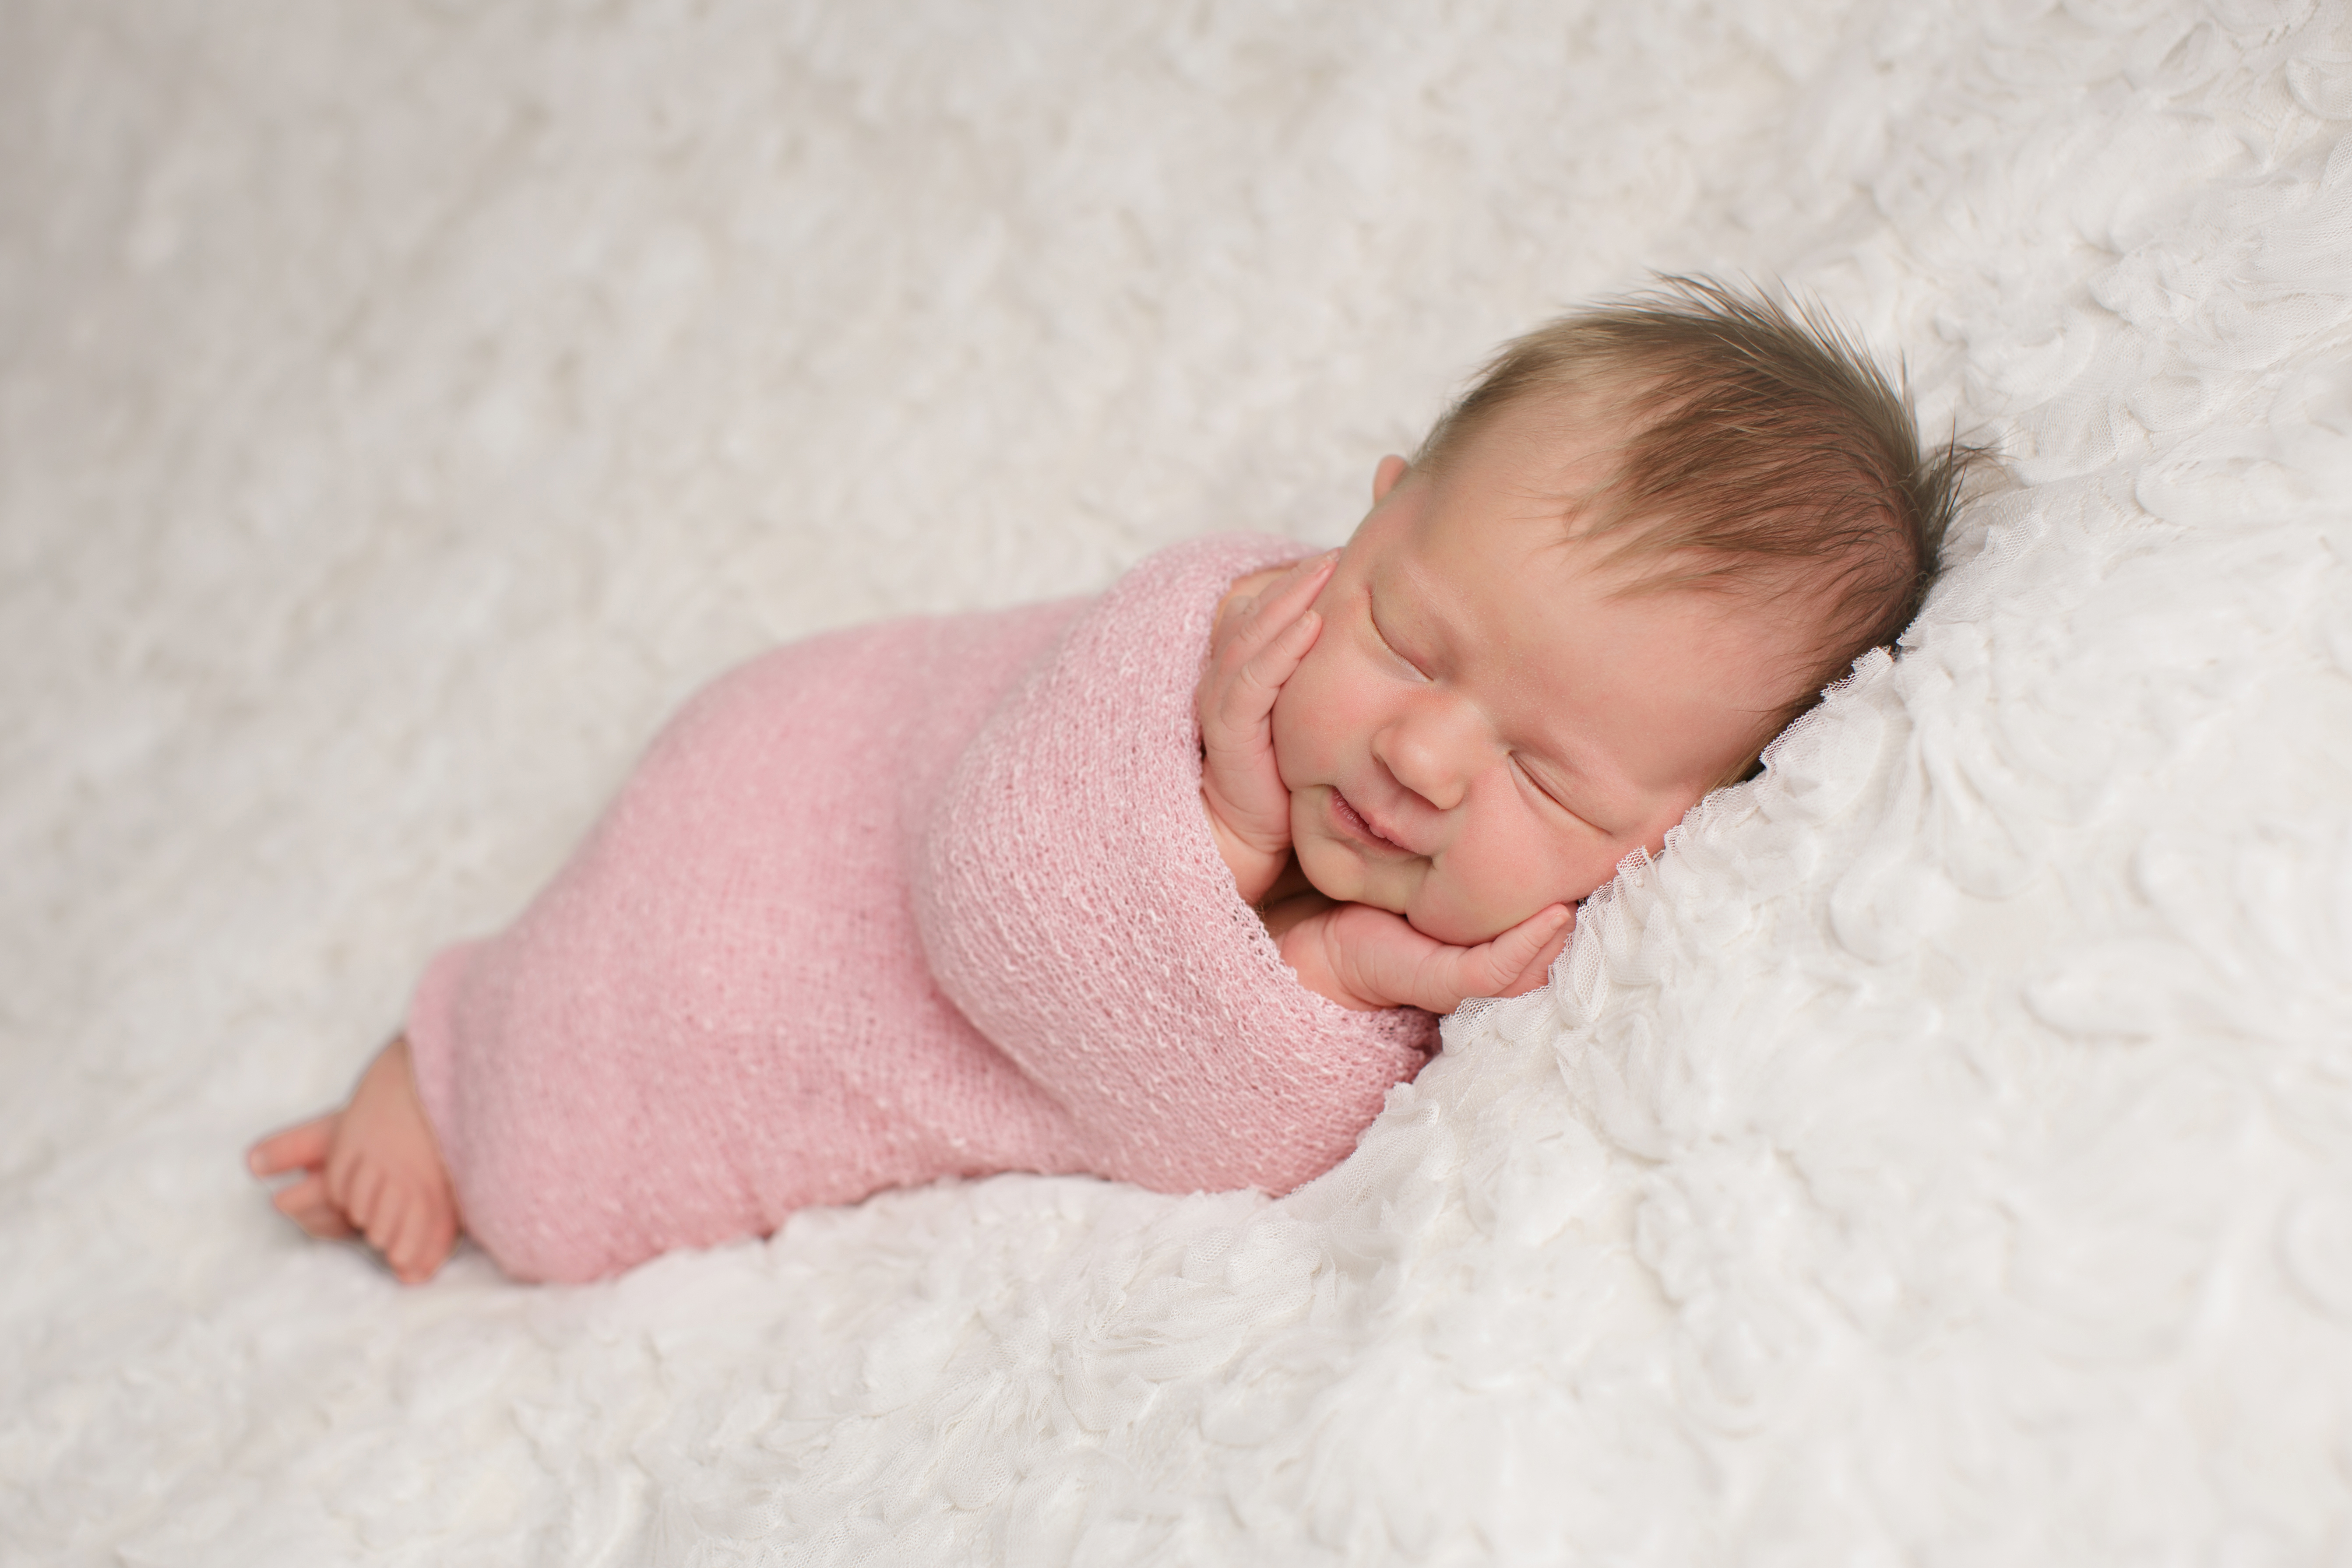 Newborn sleep - Baby Sleep Solutions by Amelia Hunter